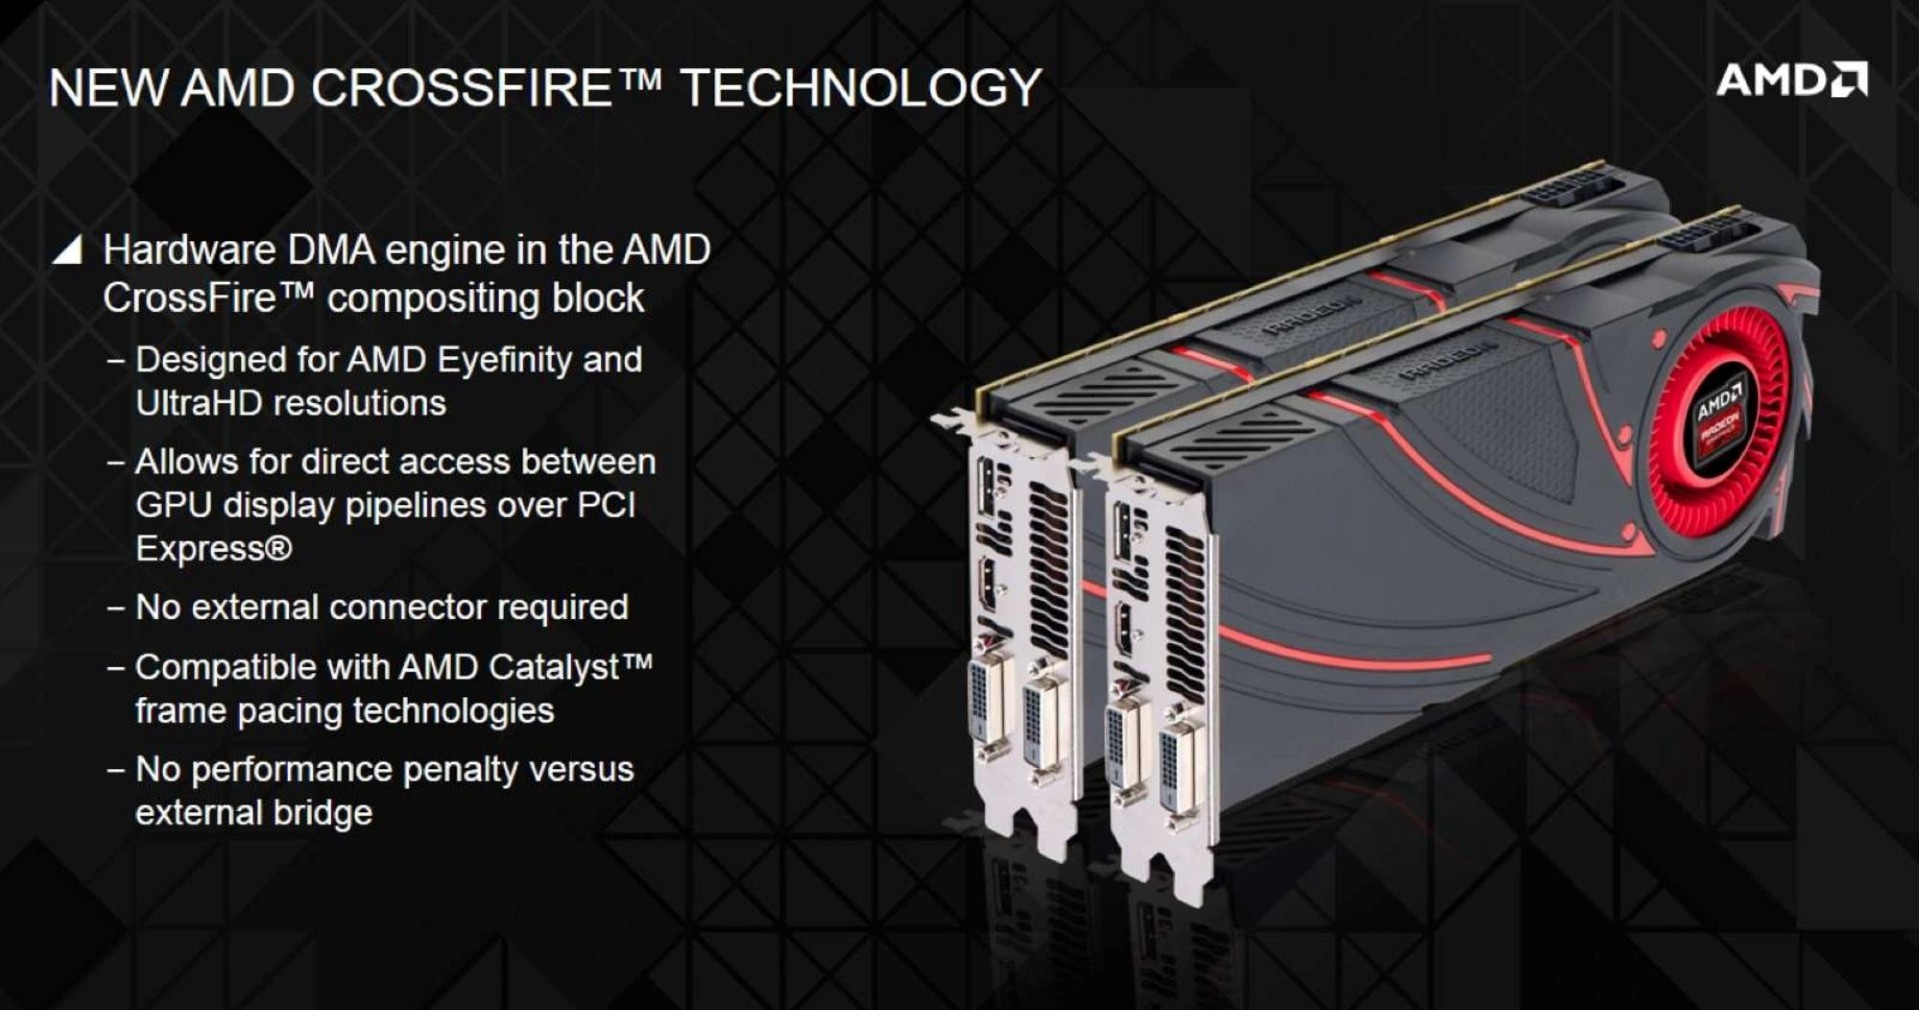 AMD R9 290 Series CrossFire Technology